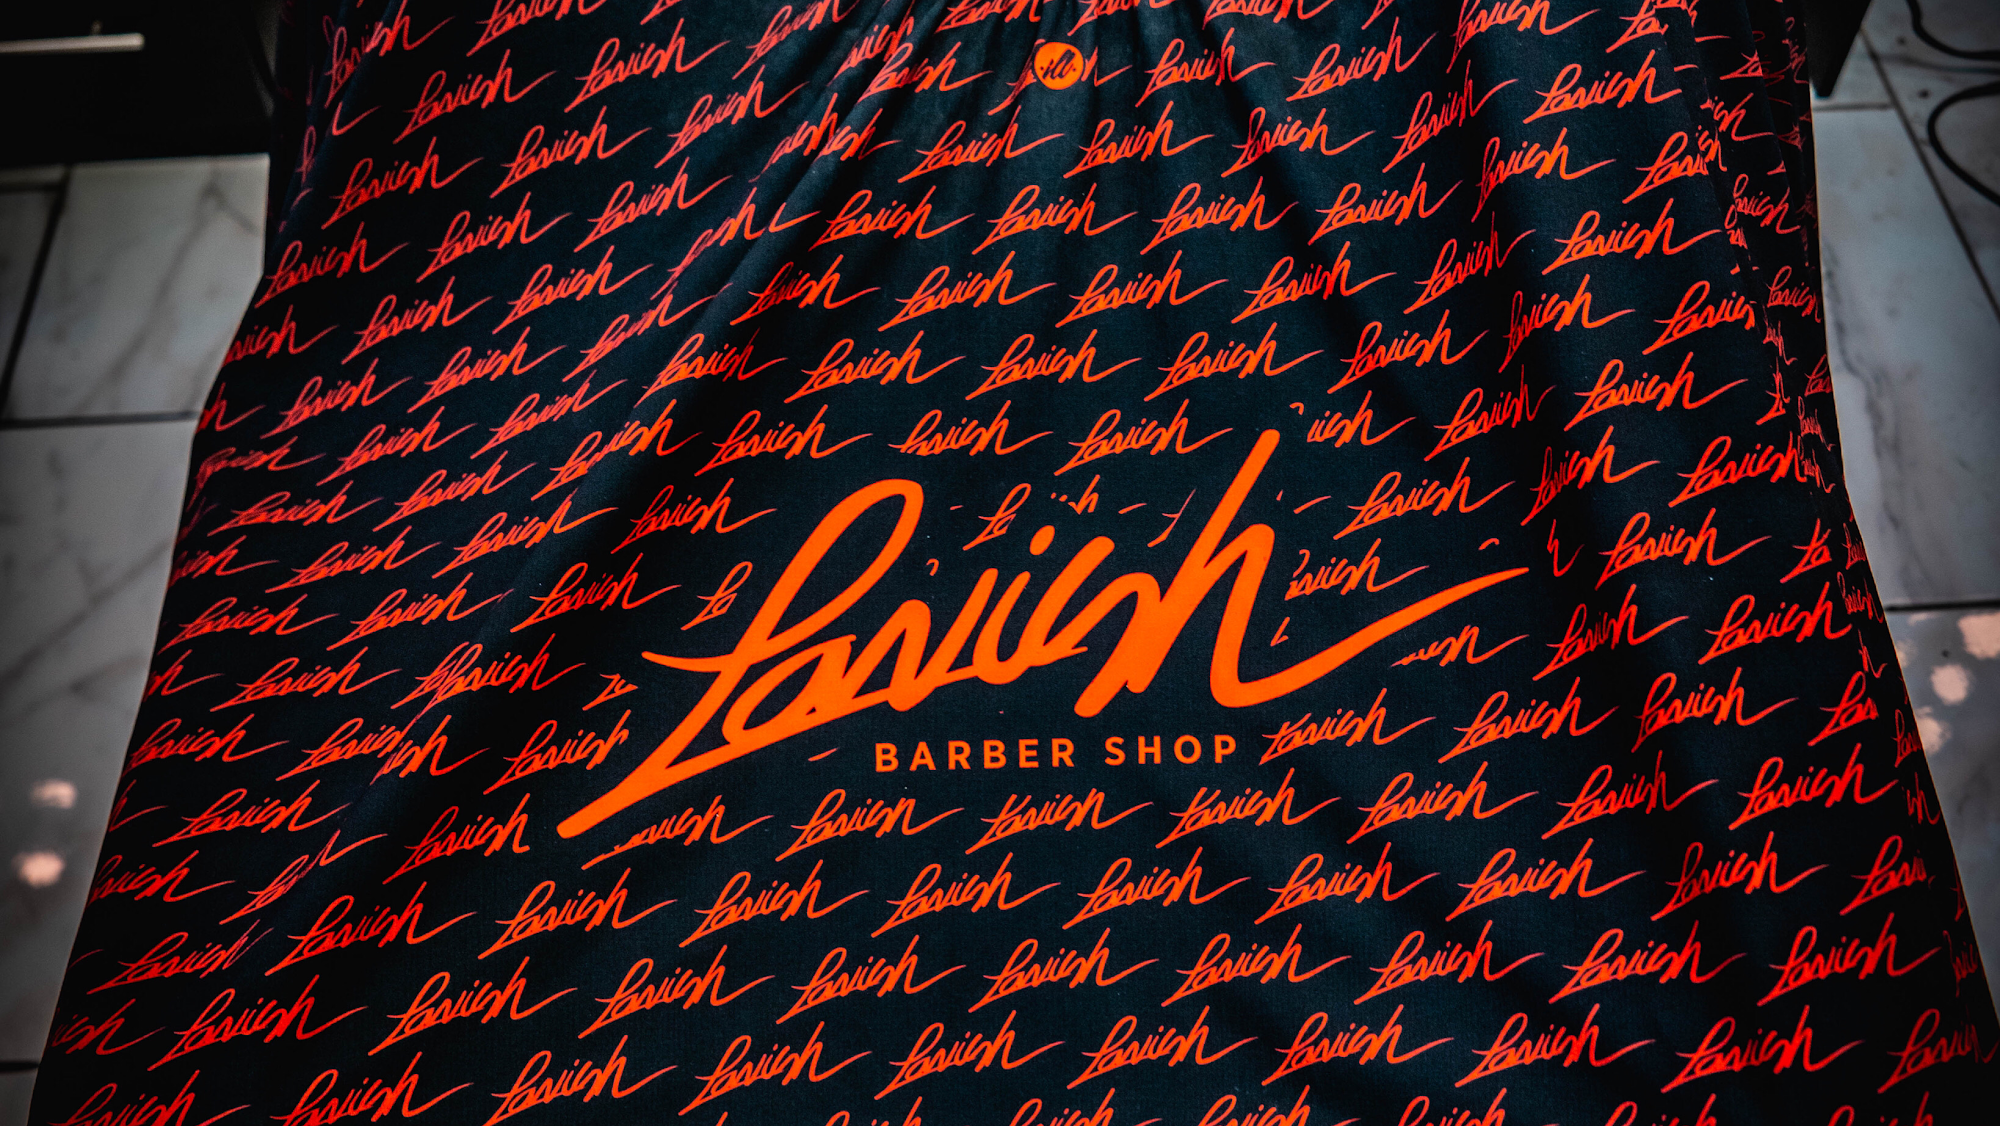 Lavish Barber Shop